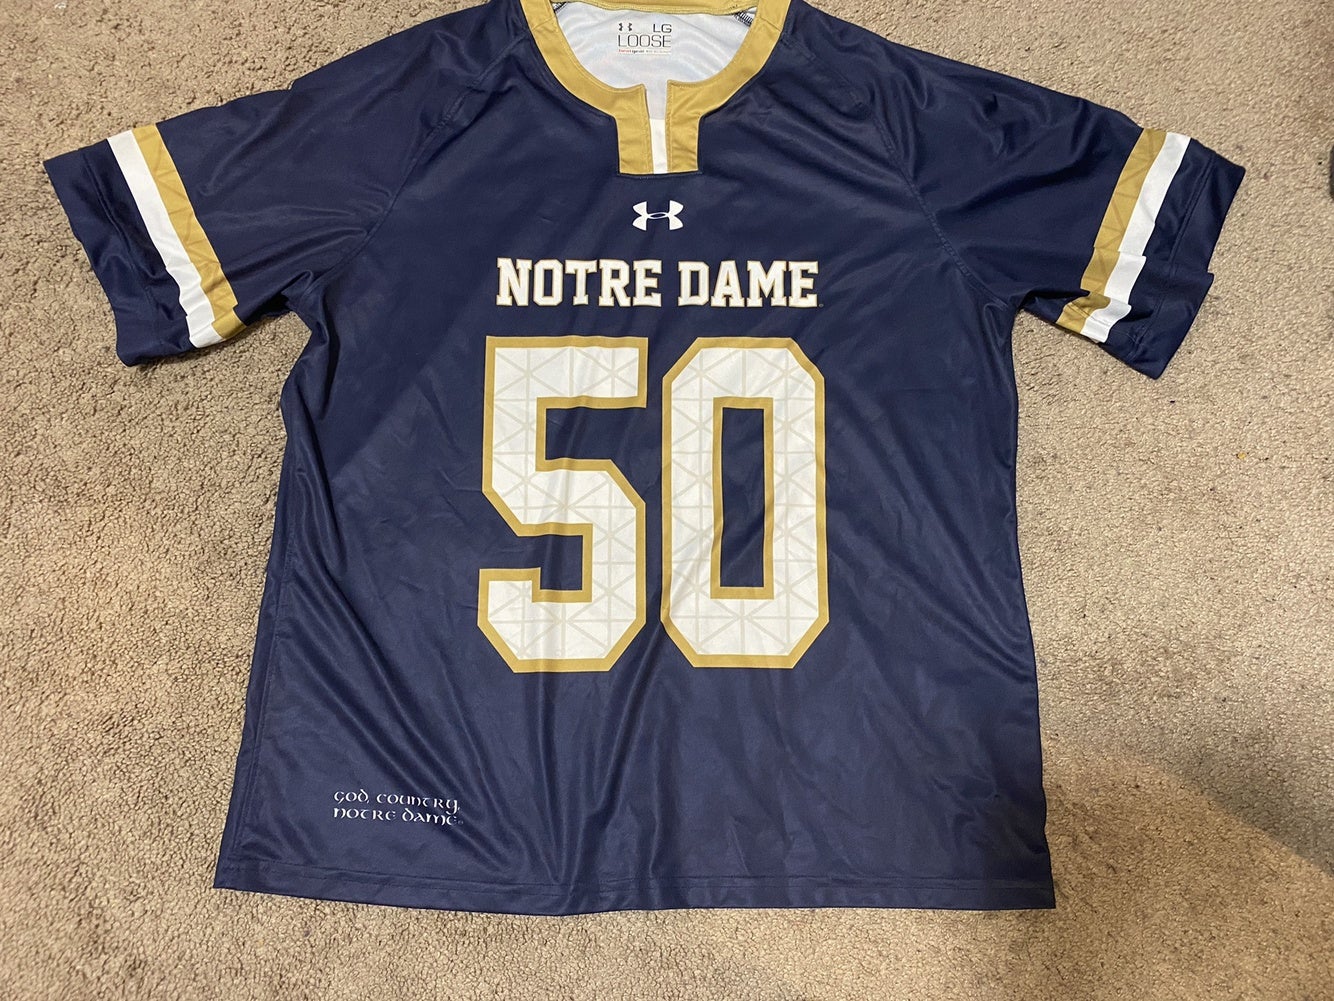 Notre Dame Lacrosse jersey